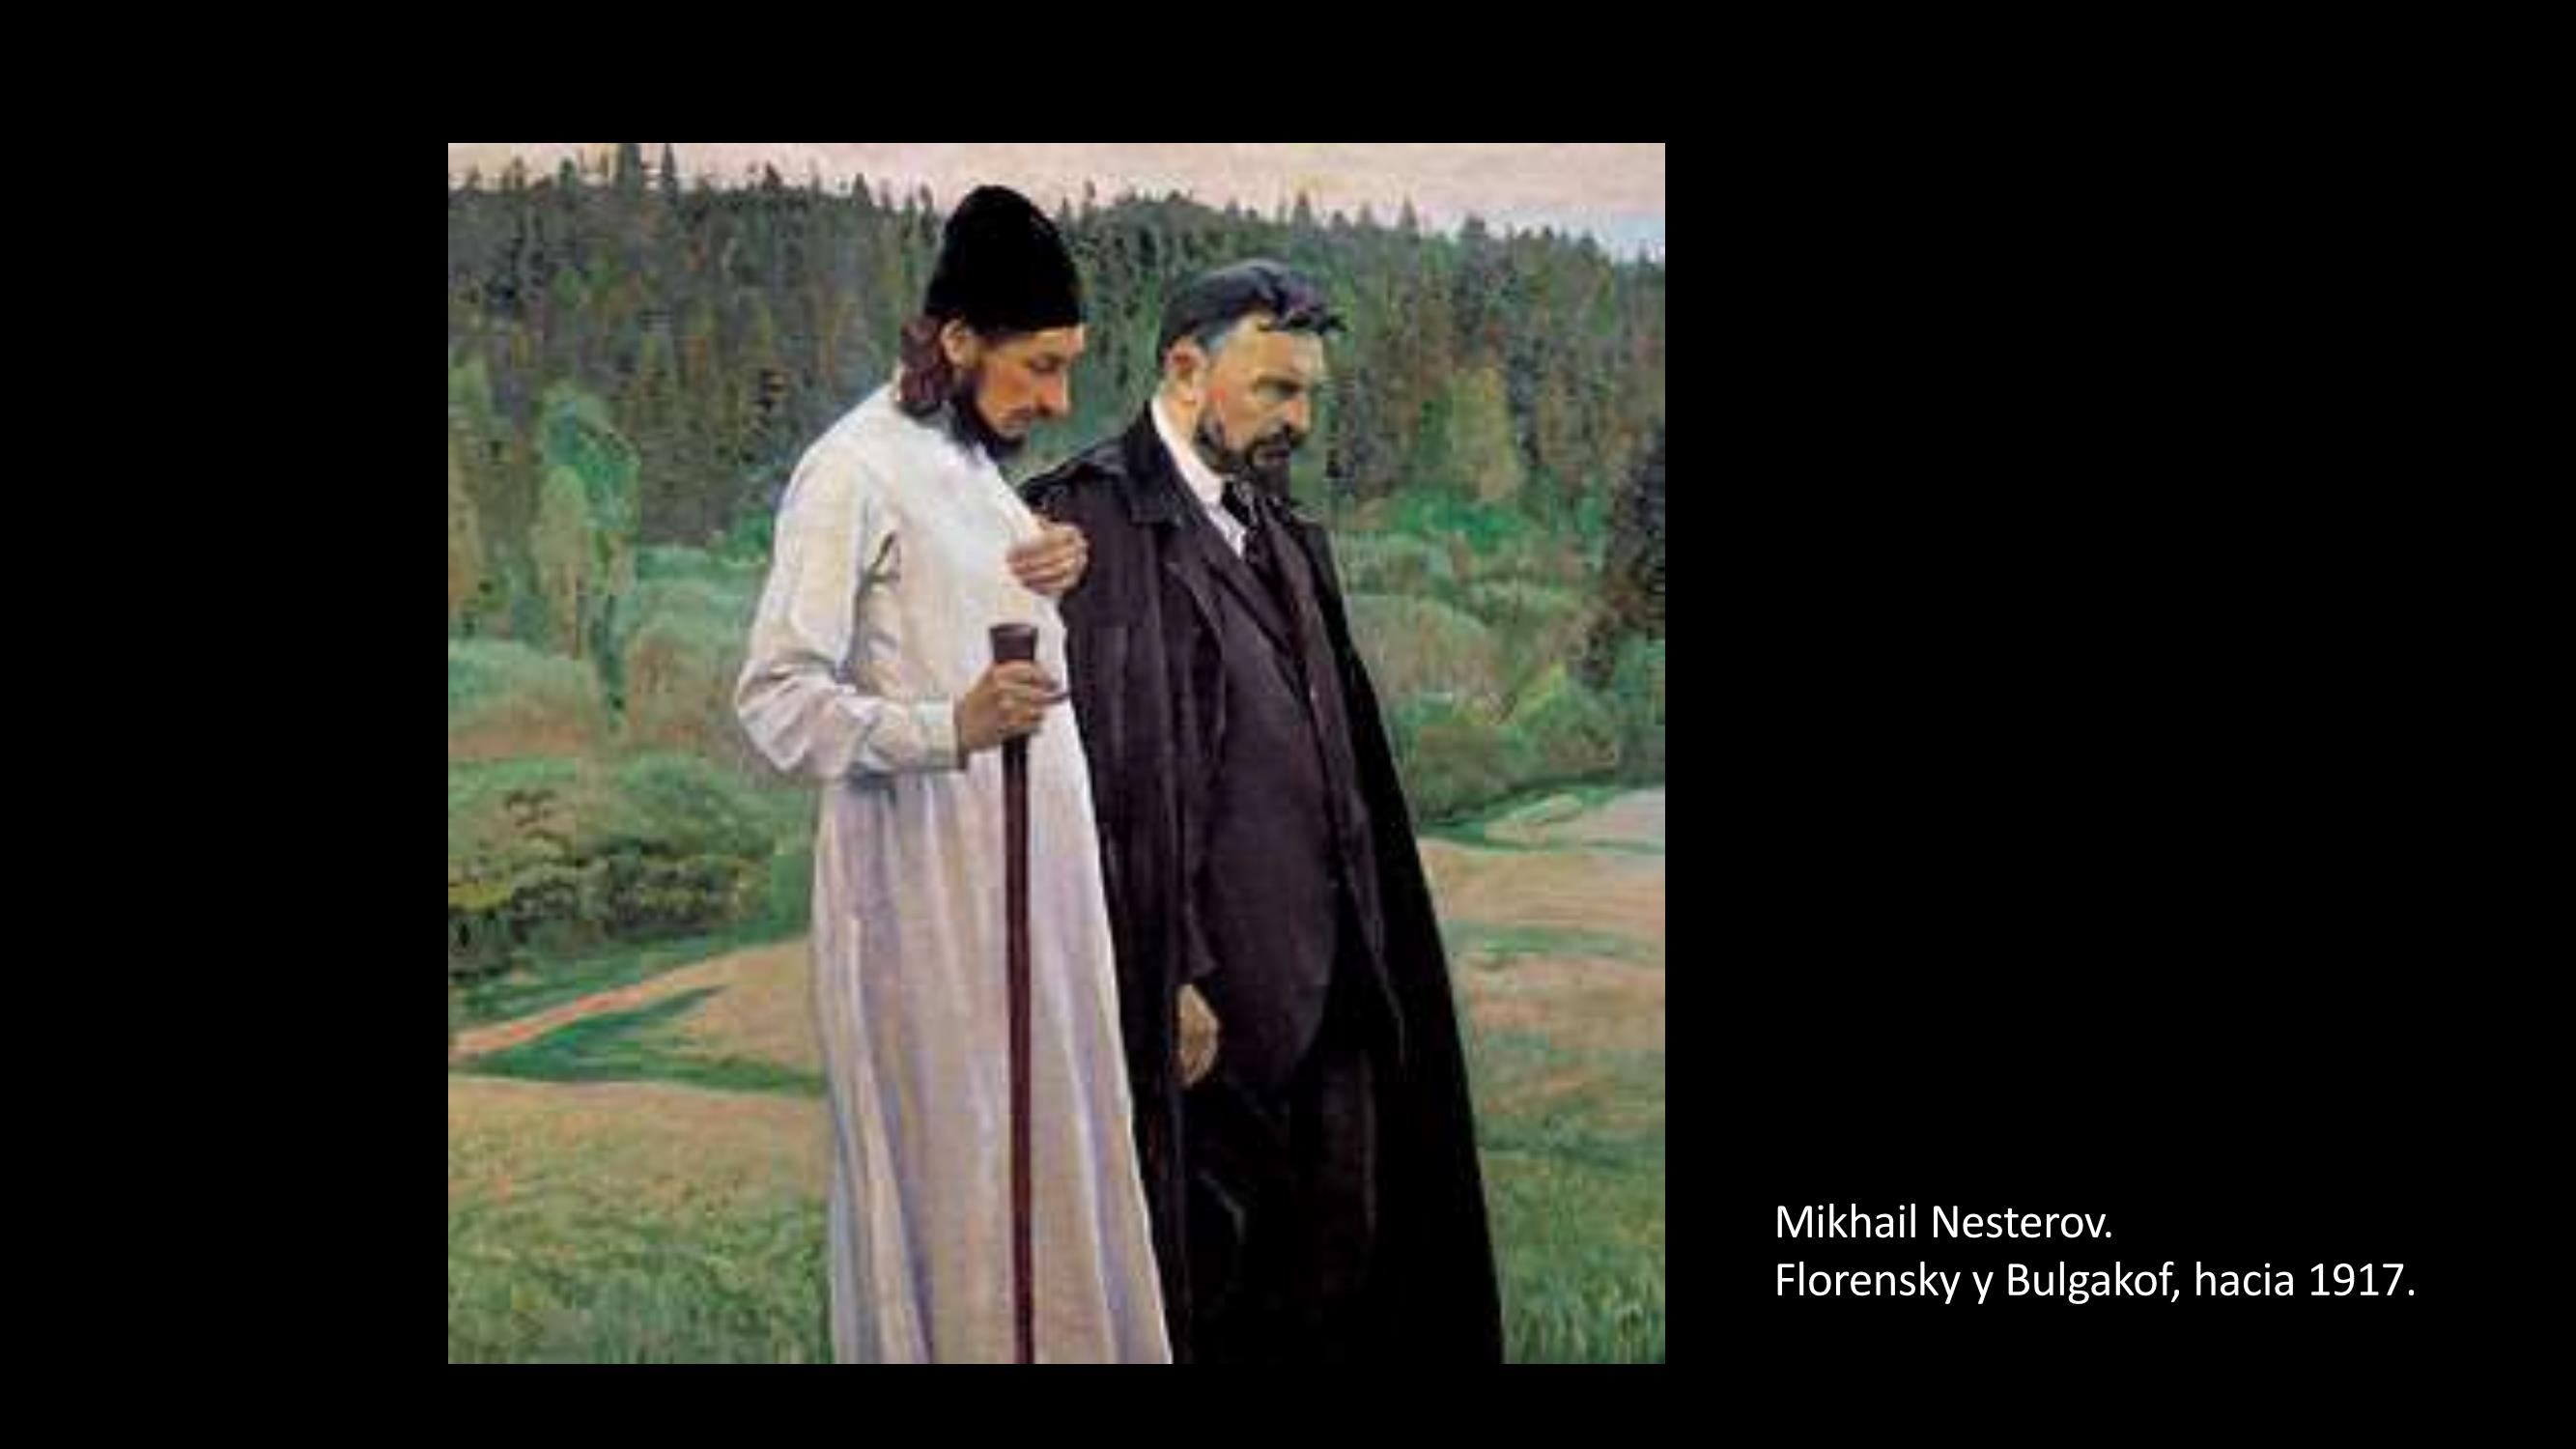 [17] Mikhail Nesterov, Florensky y Bulgakof